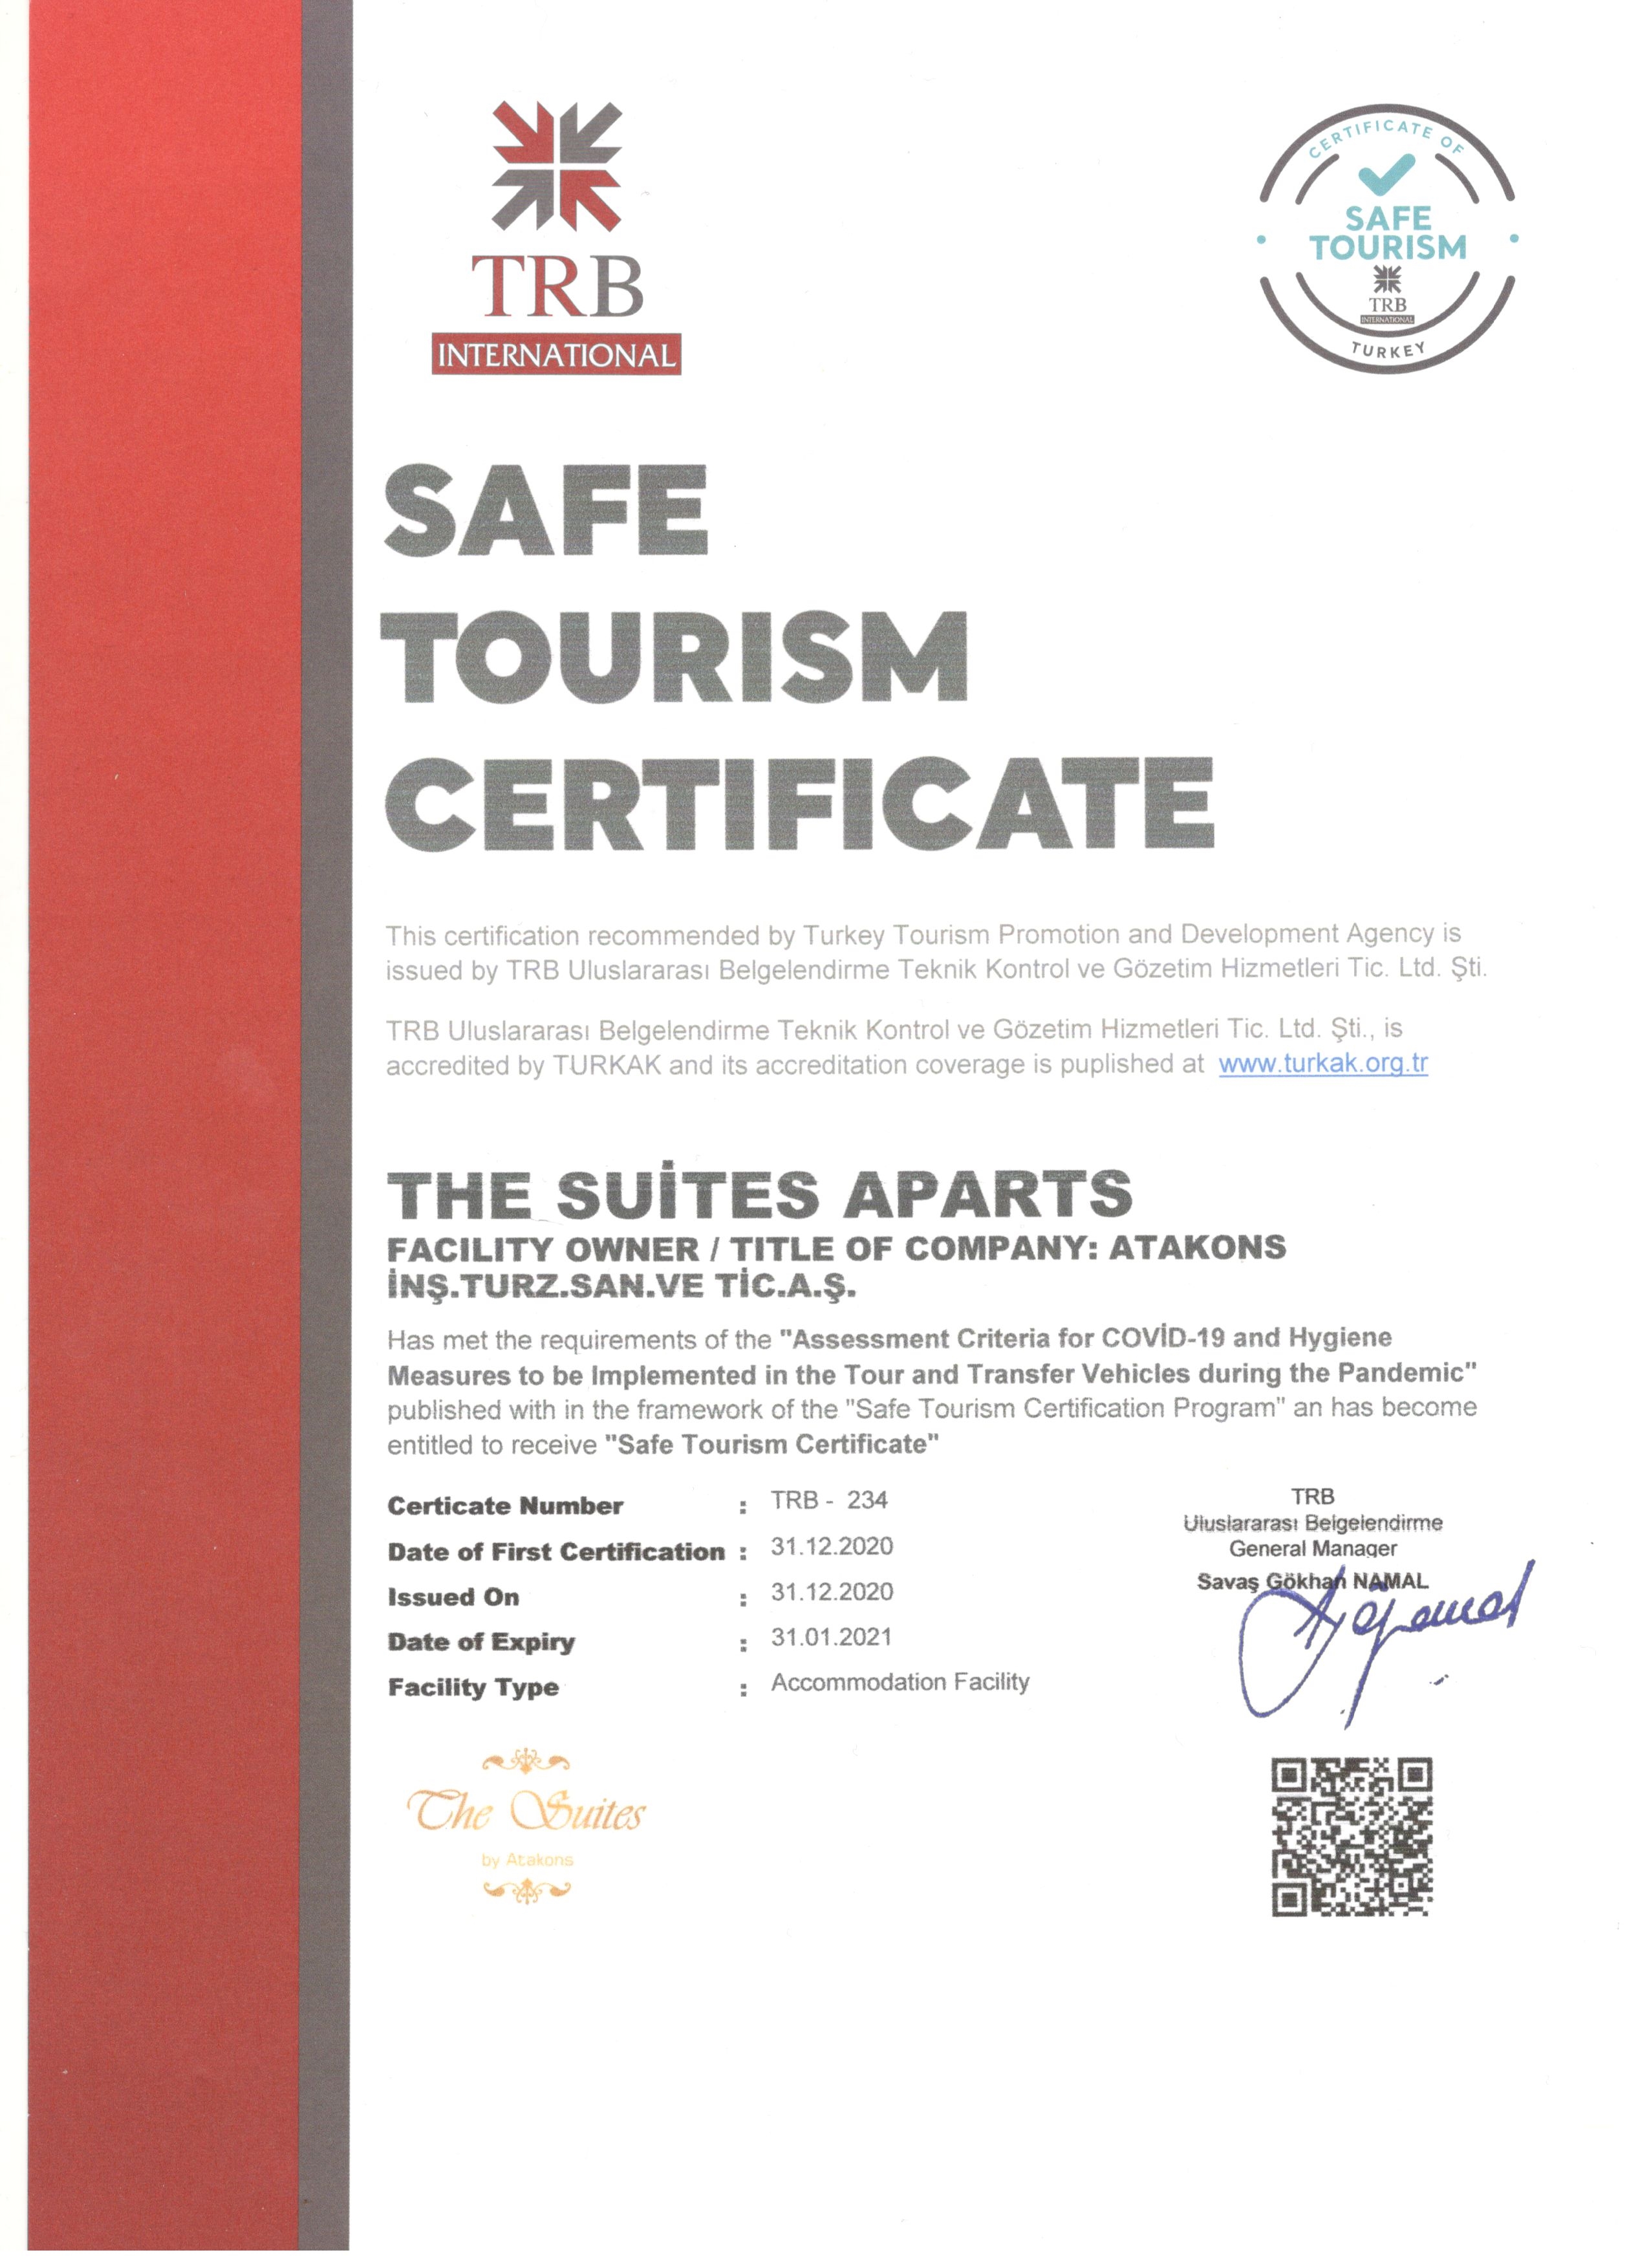 SAFE TOURISM CERTIFICATE